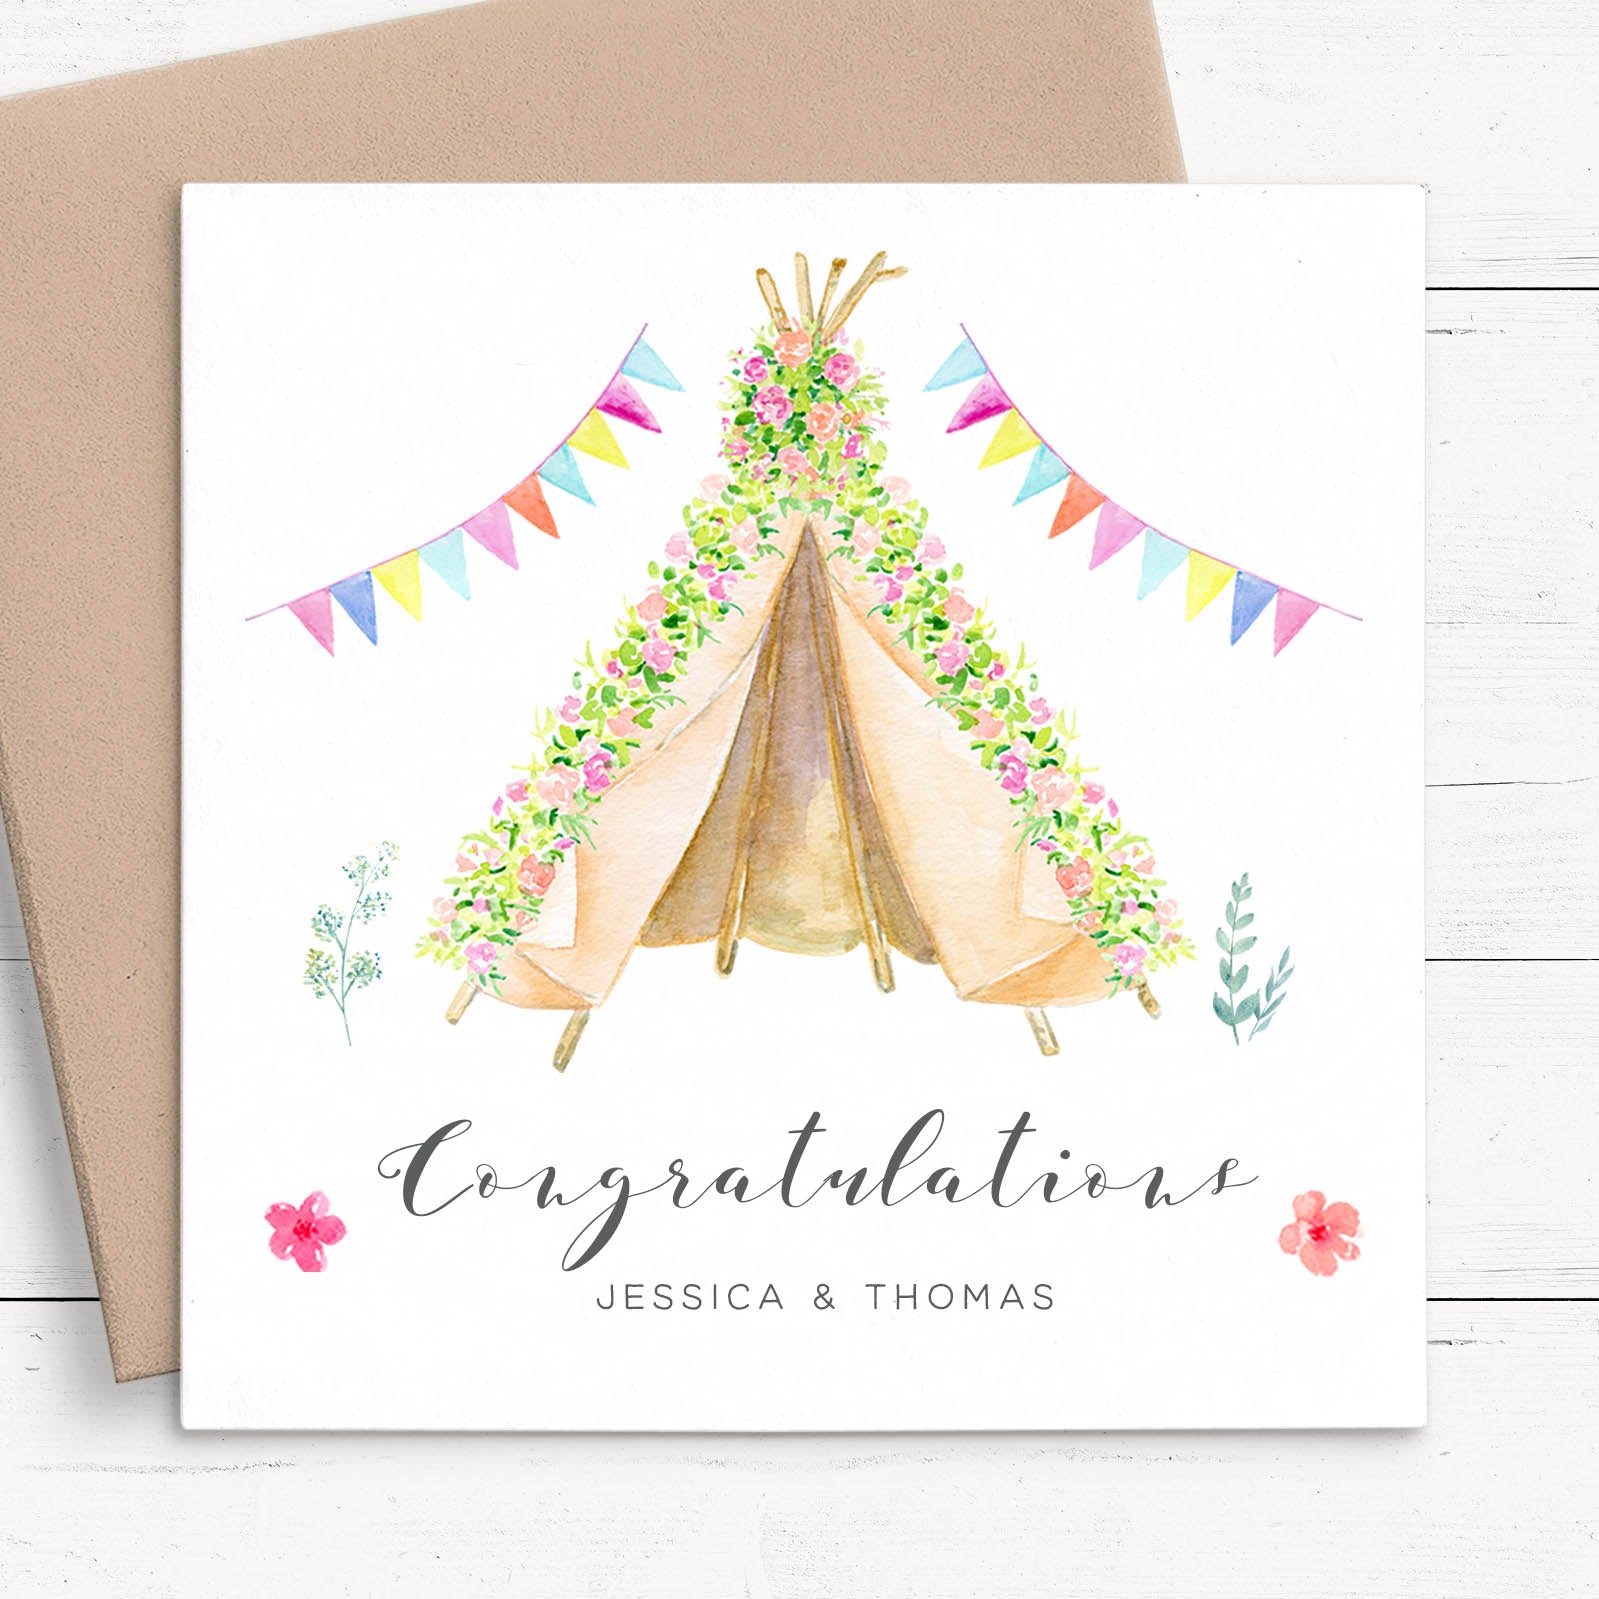 watercolour teepee tent wedding card couple personalised square white cardstock kraft brown envelope